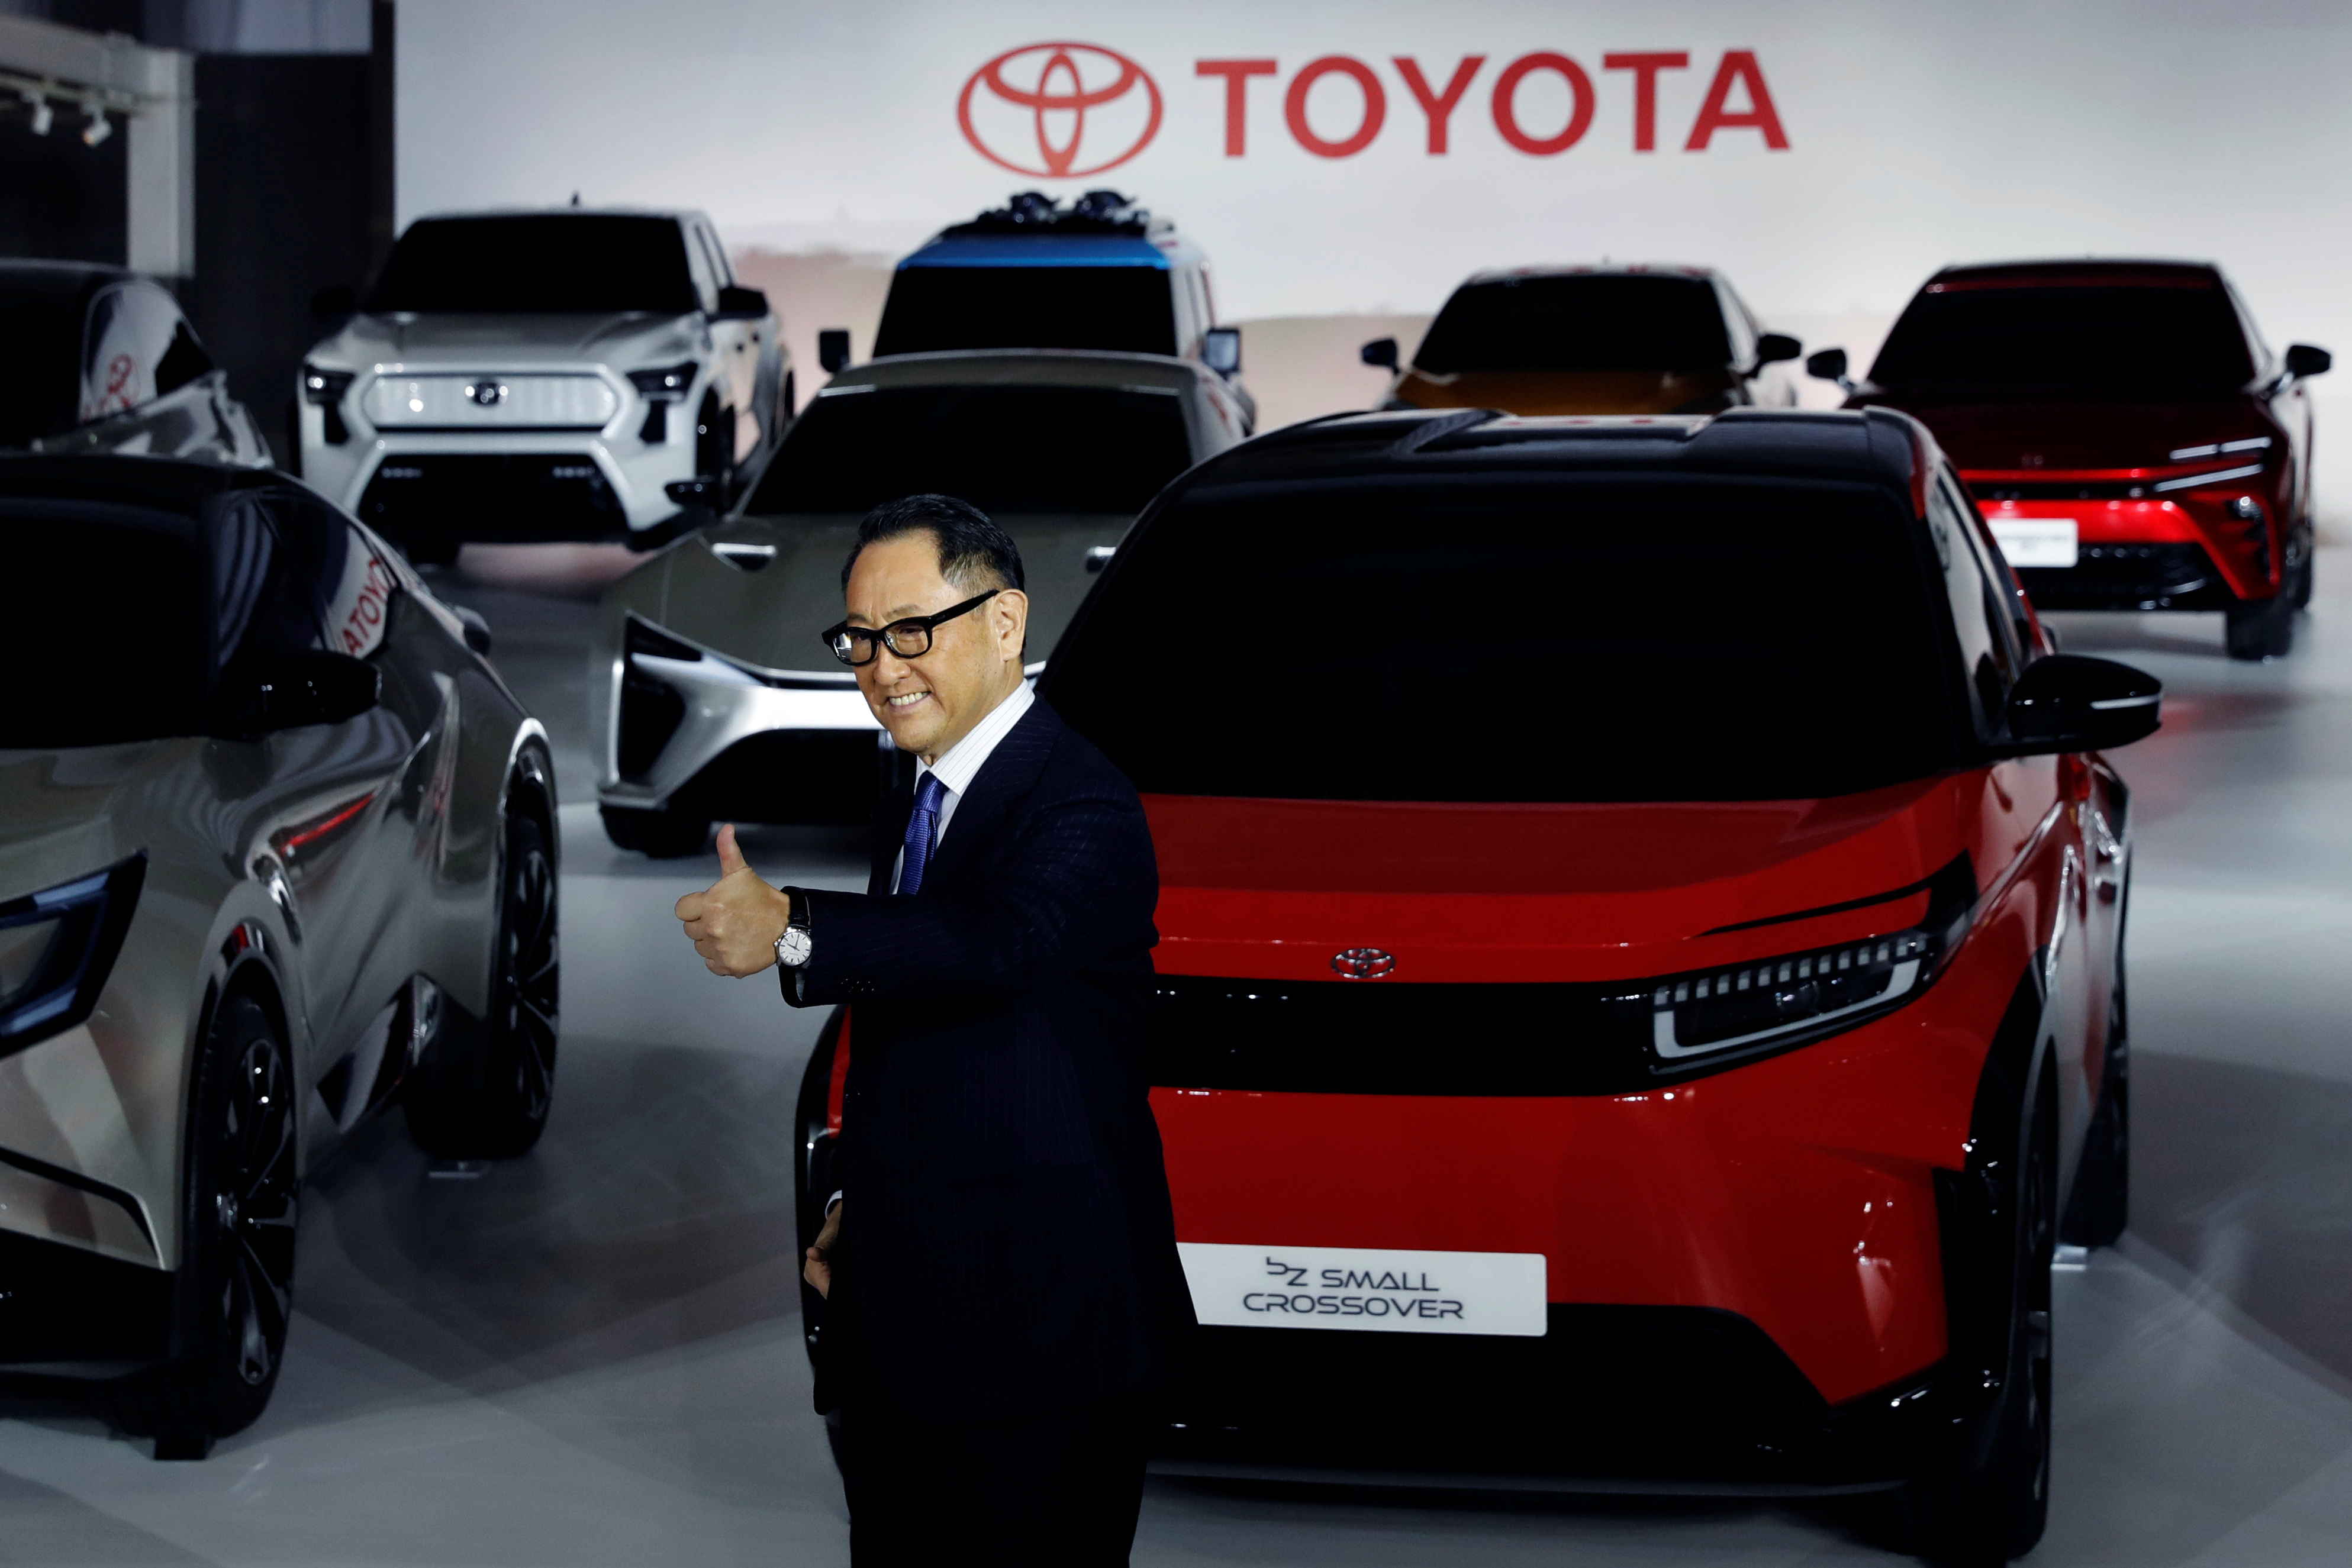 Toyota president calls meeting California zeroemissions requirements